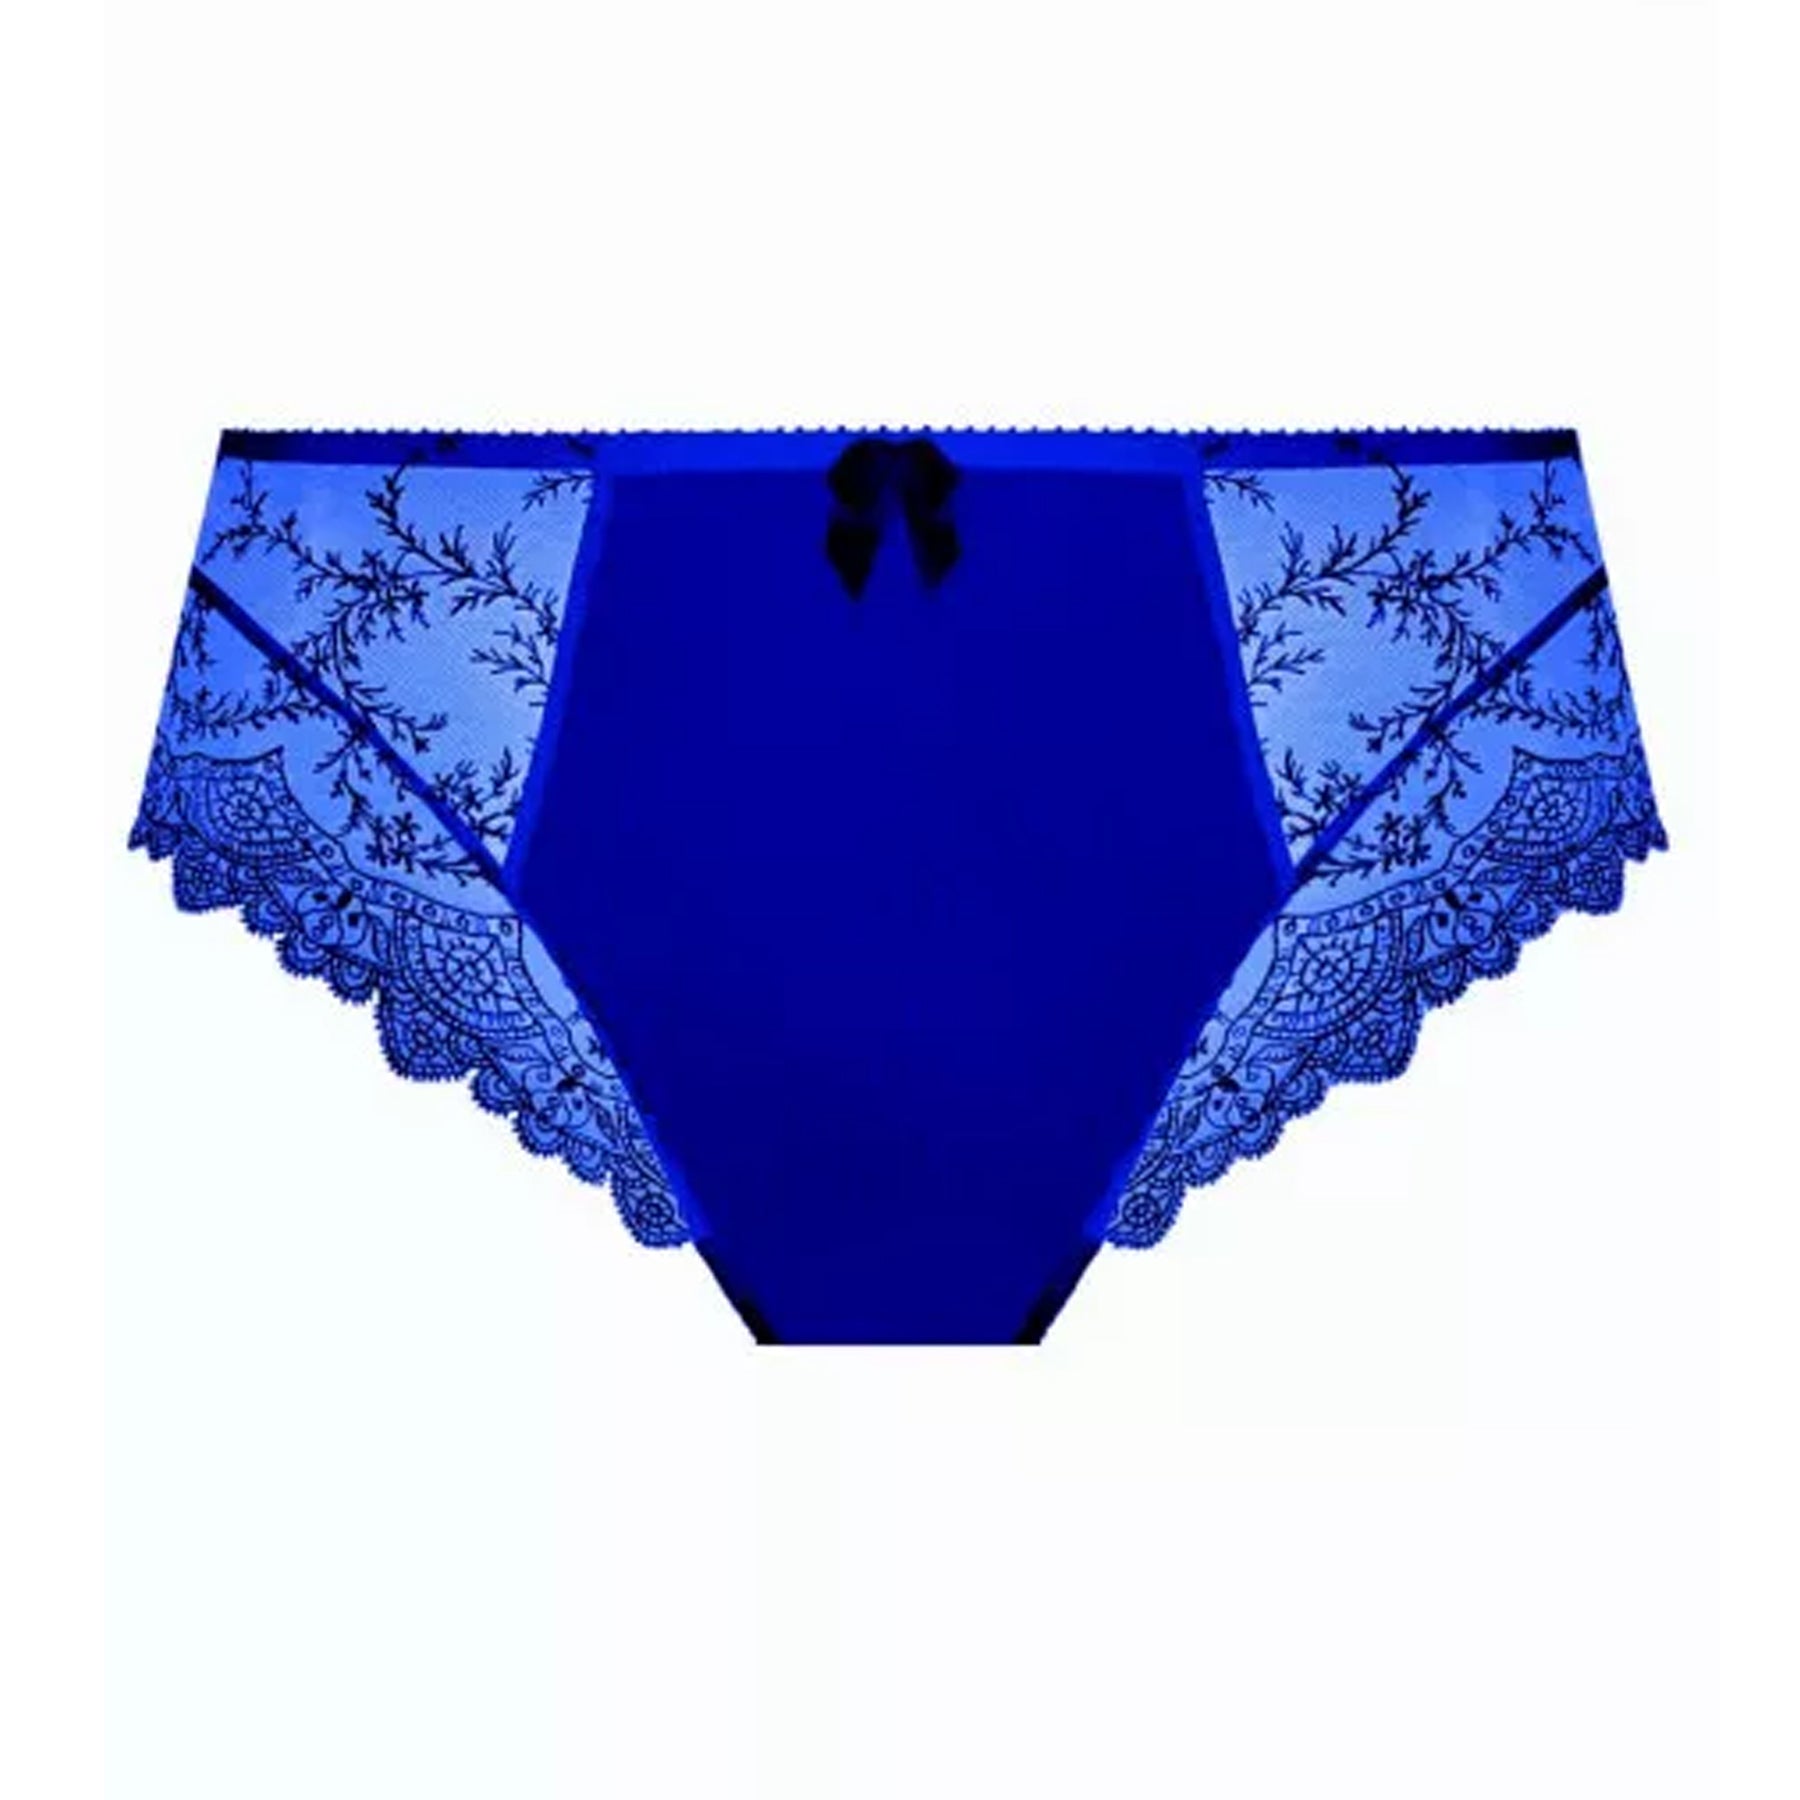 ANTONIO MARRAS Underwear Silk Navy Blue Printed Push Up Bra s. IT2 / US 34  $200